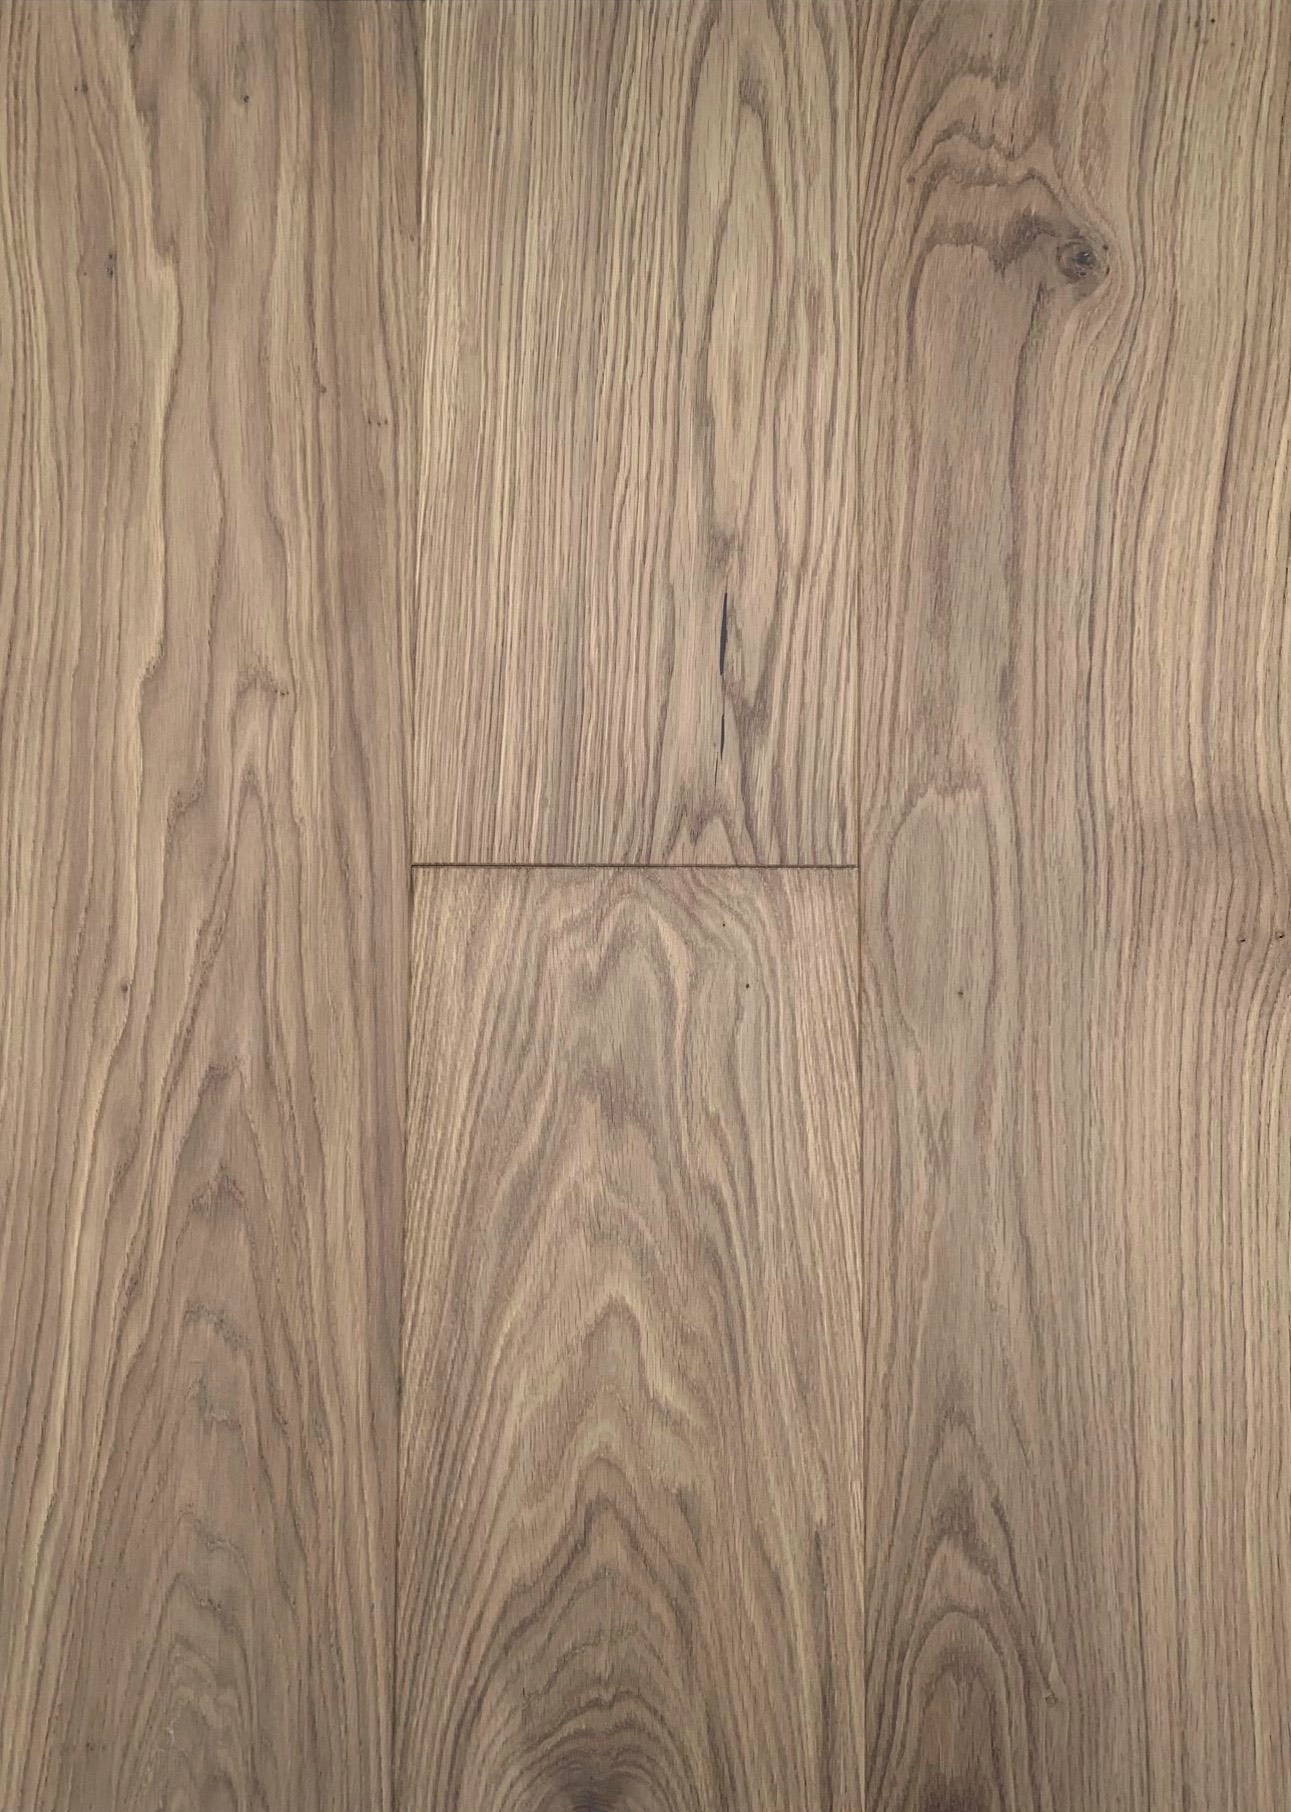 Boher Three Tree Flooring European White Oak Engineered Hardwood Chevron Veneto Collection 3 7/8